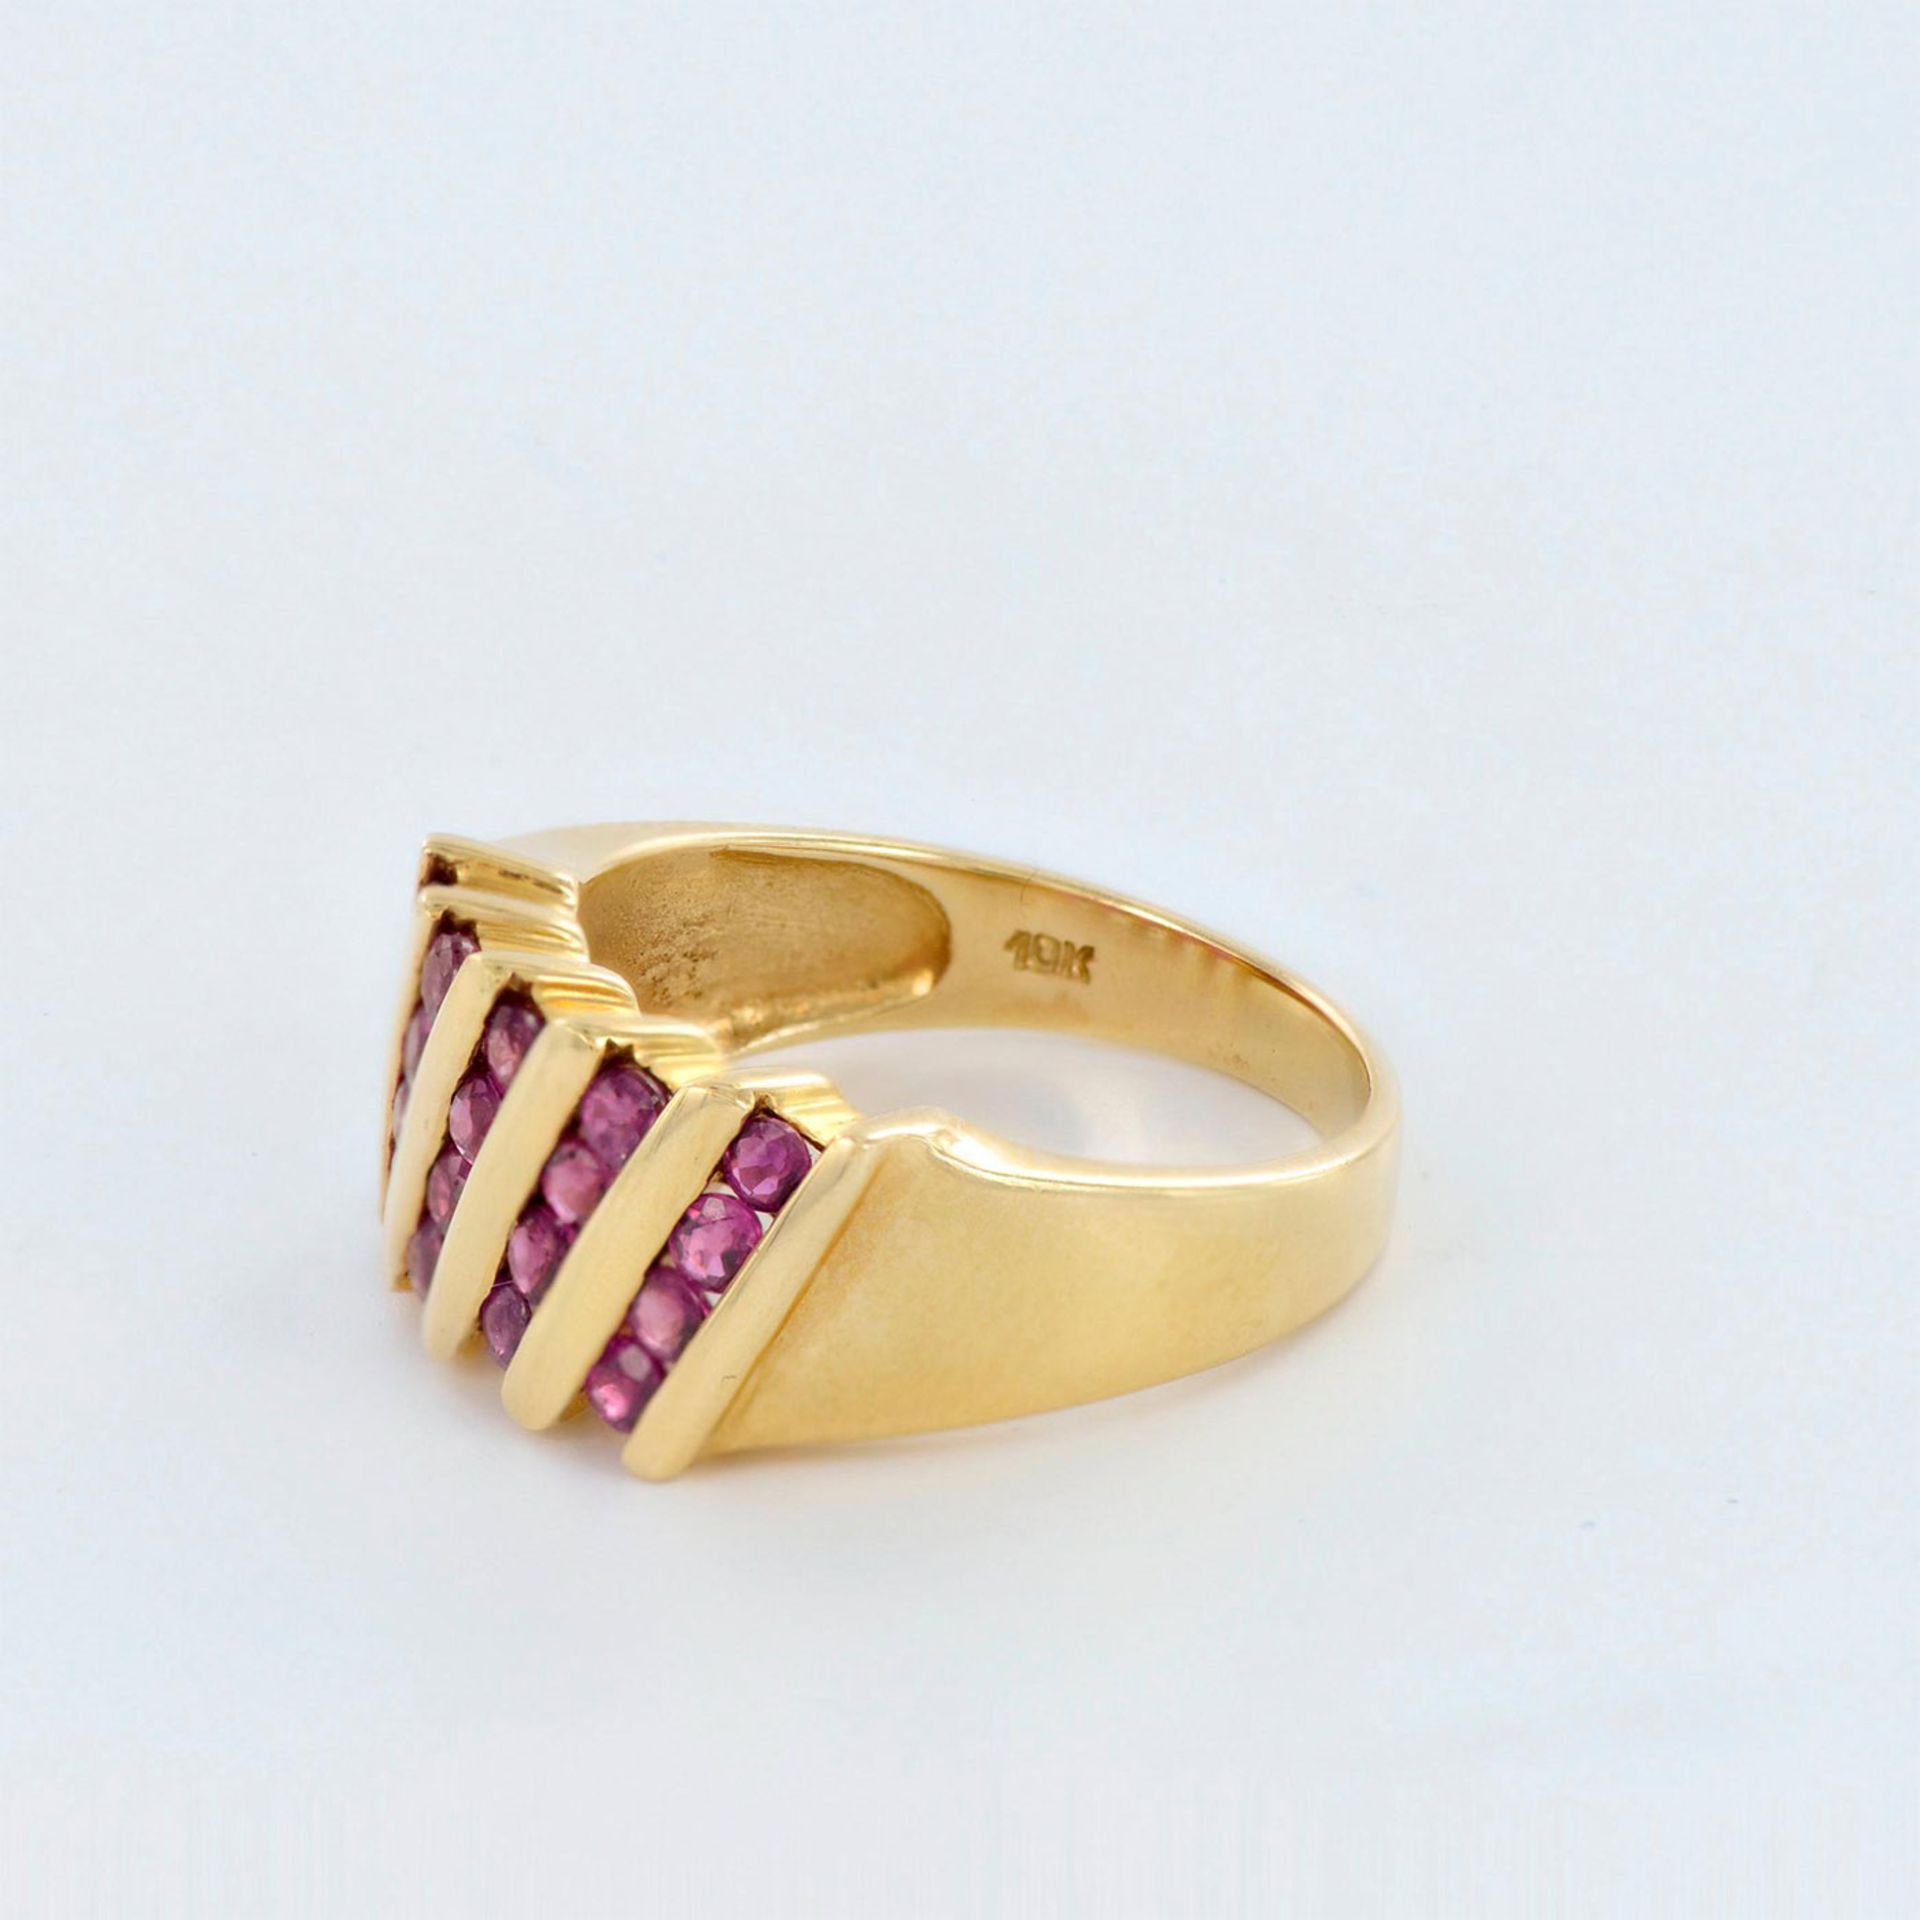 Samuel Aaron, Inc. 10k Gold with Pink Gemstones Ring - Image 3 of 5